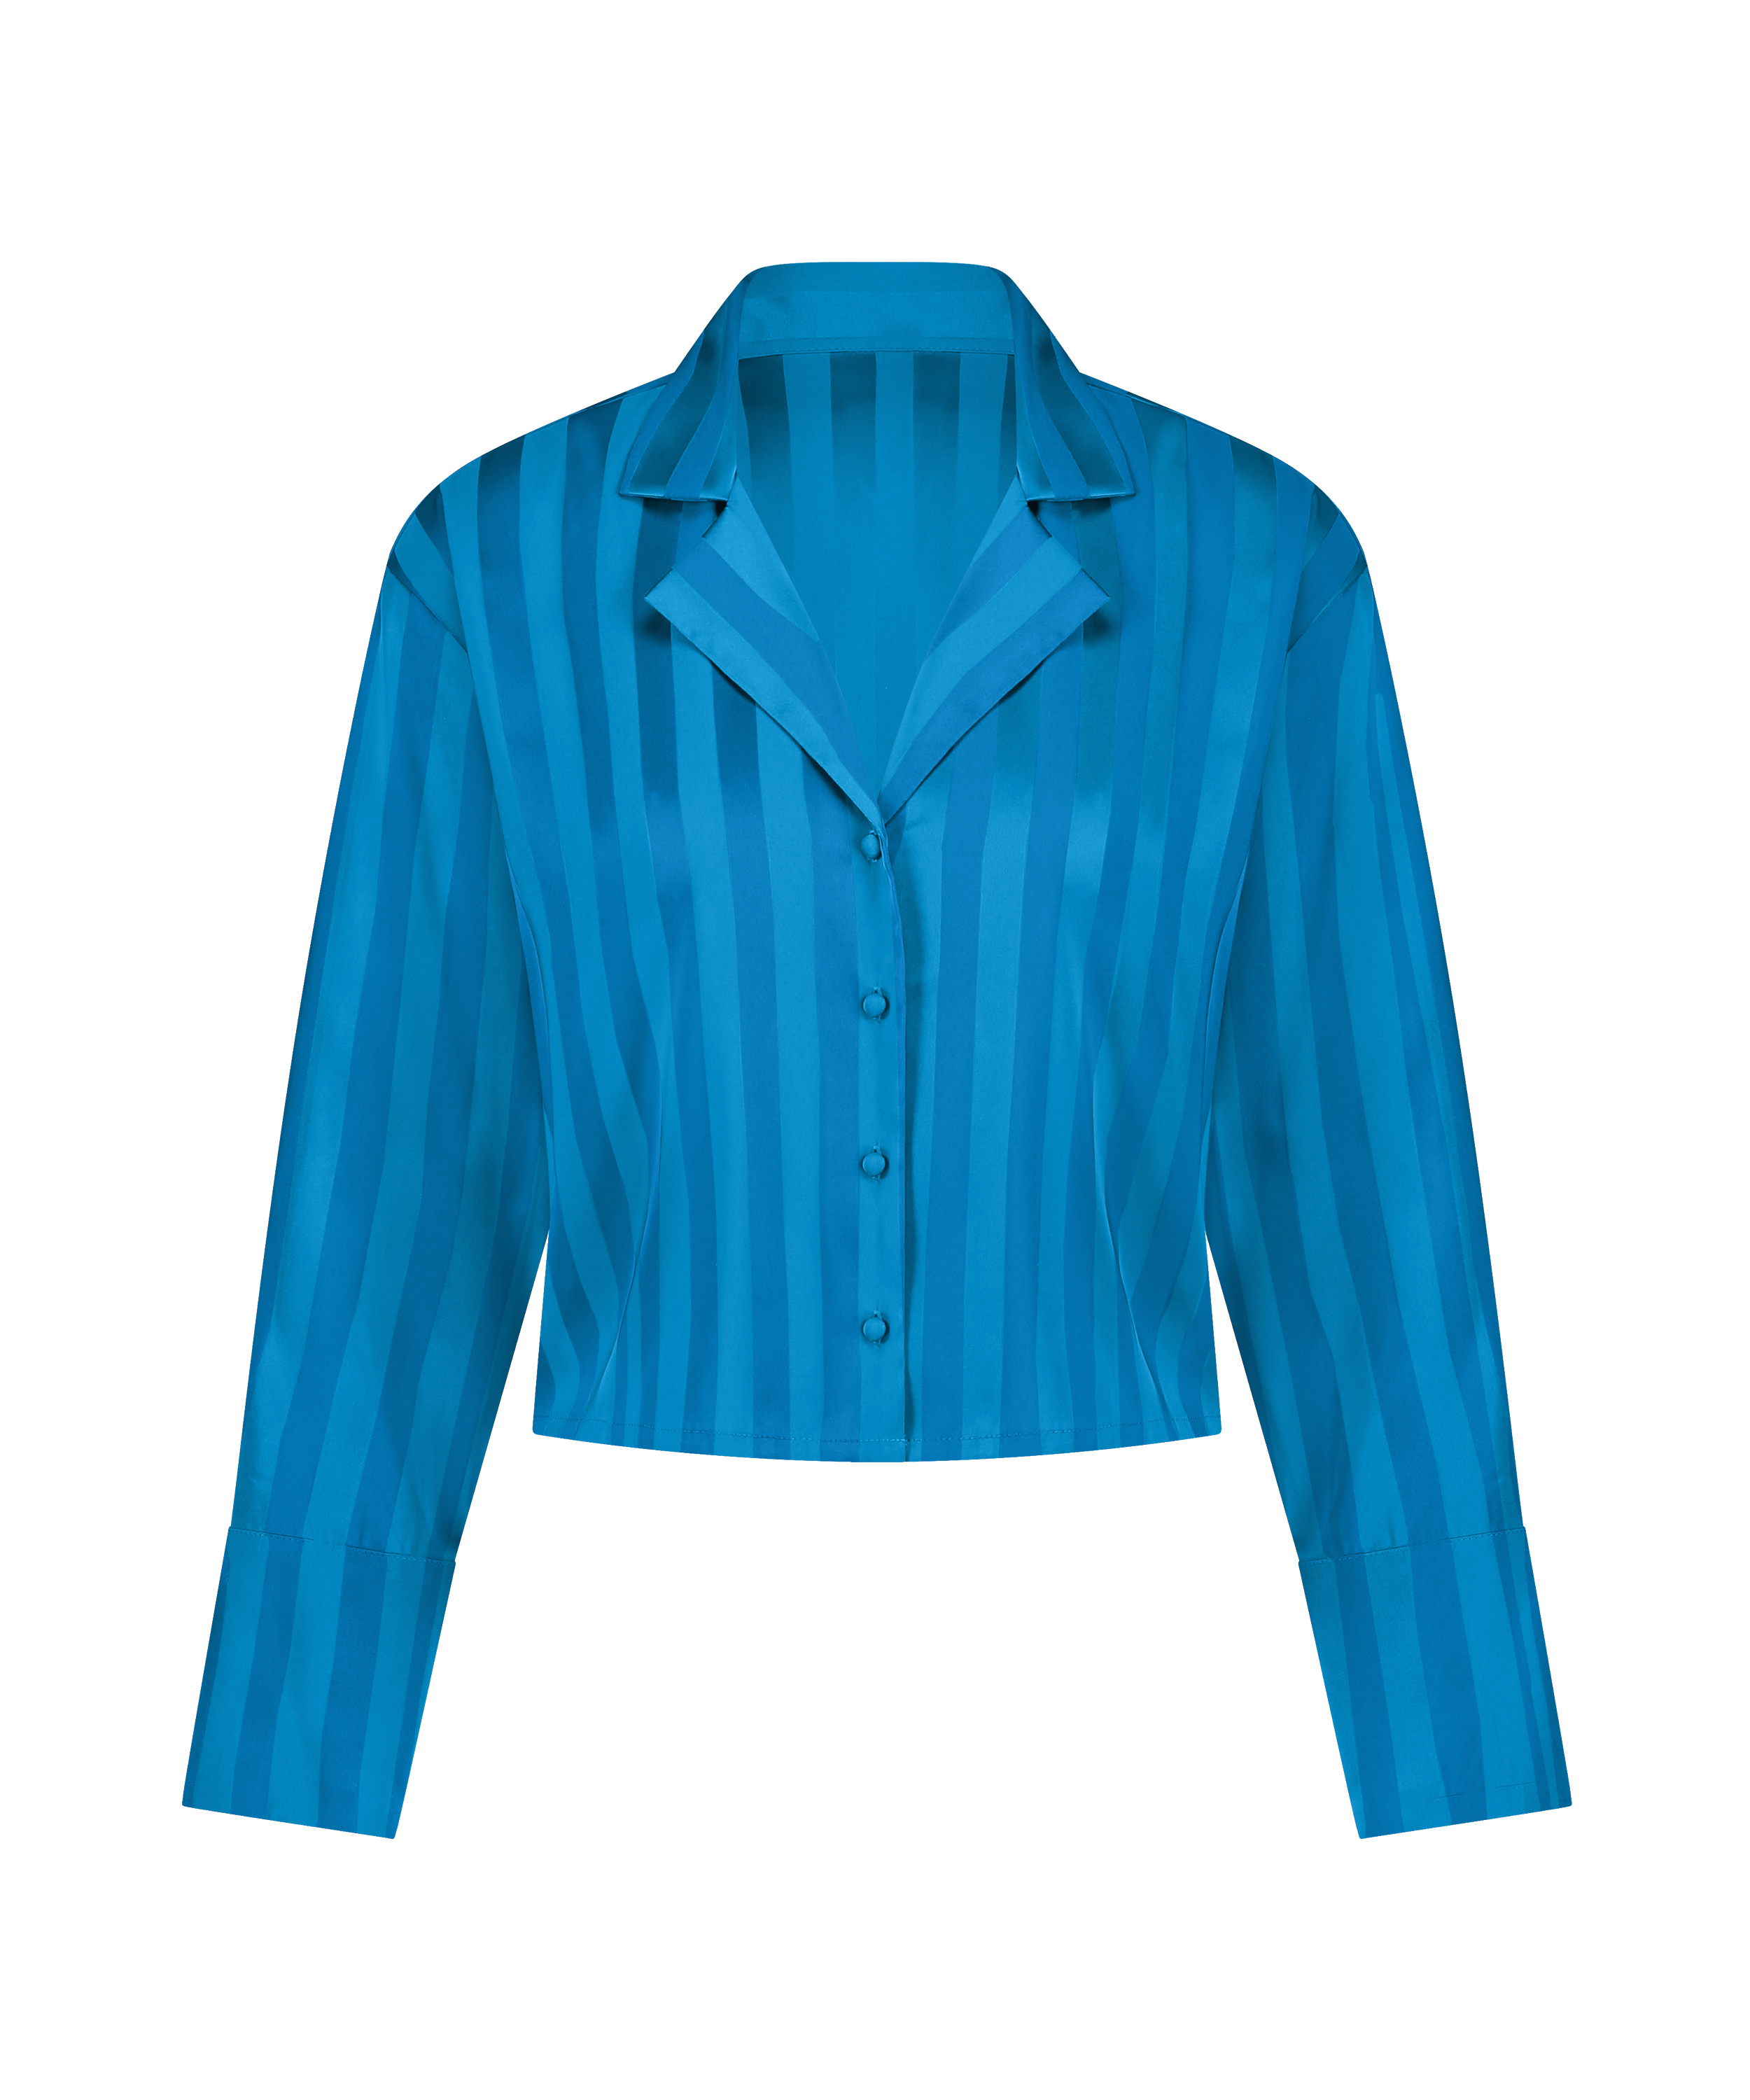 Satin Long-Sleeved Jacket, Blue, main